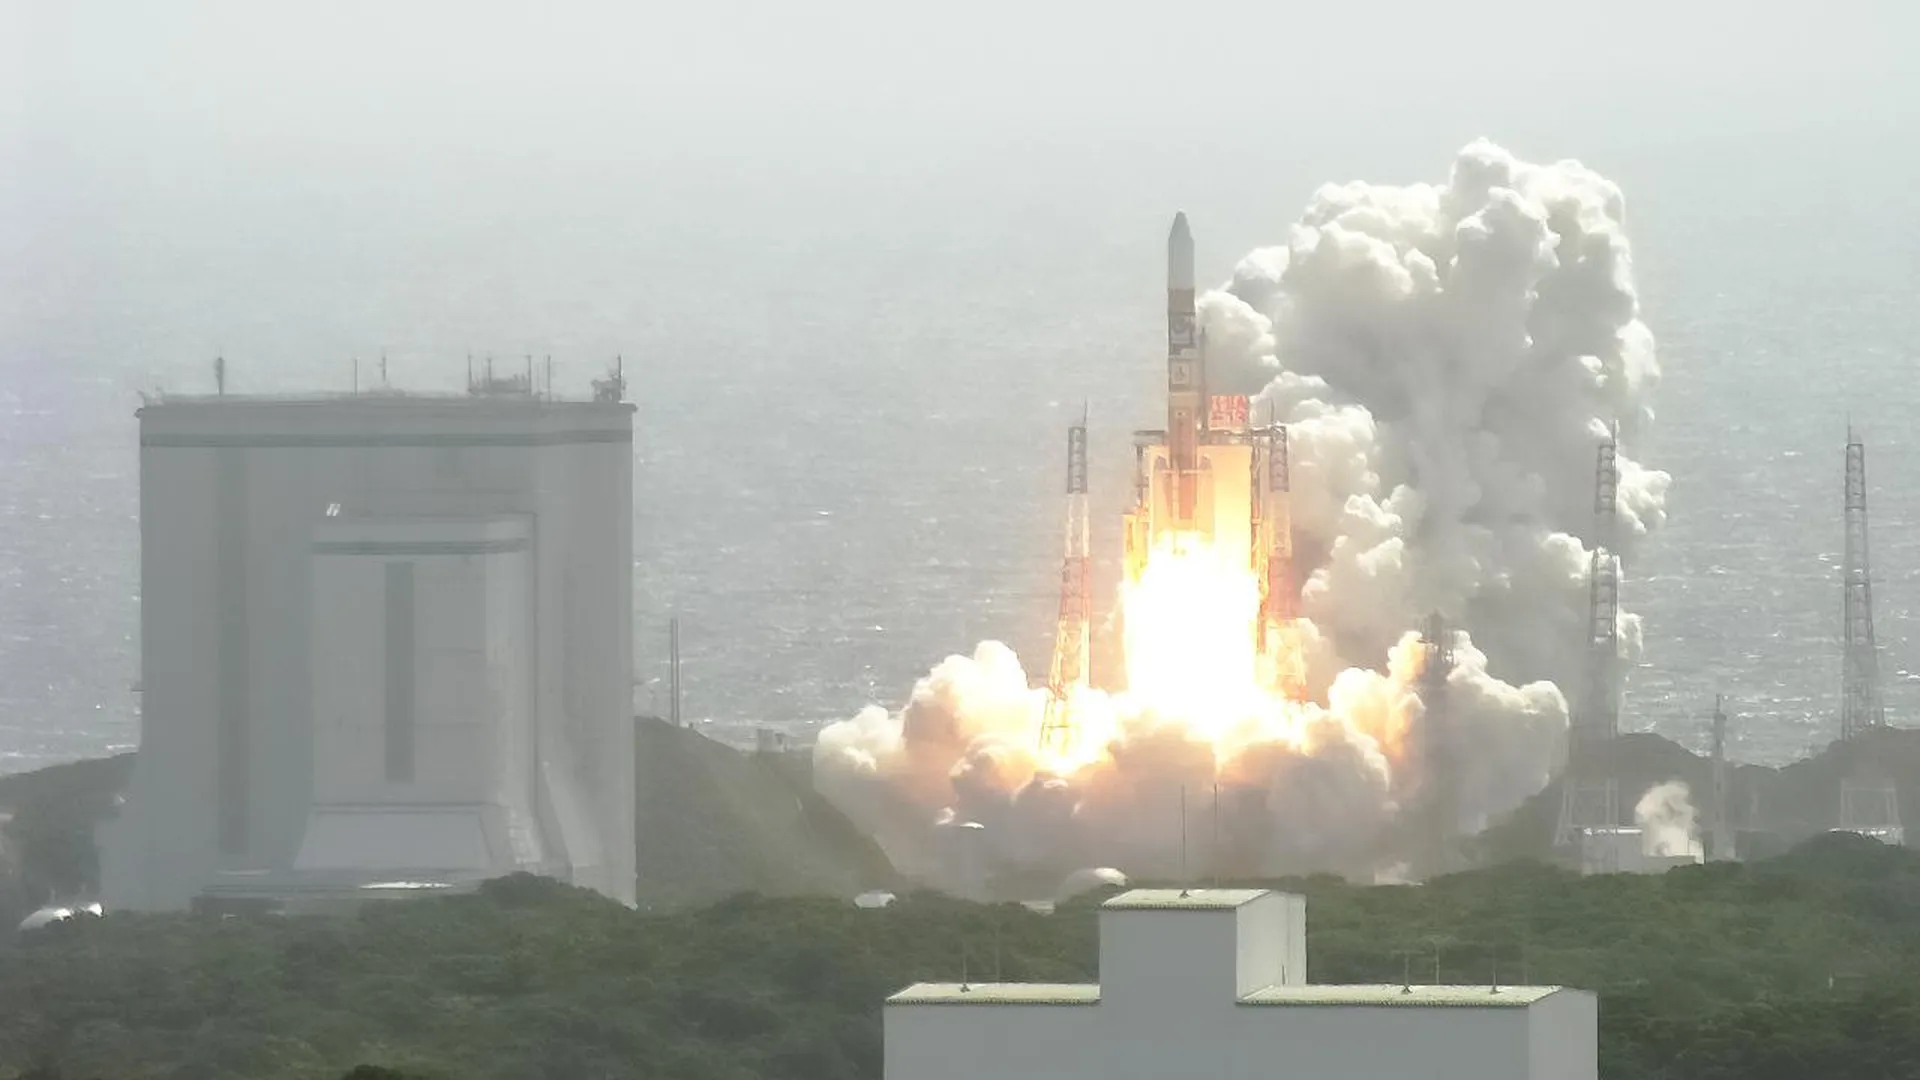 АР: Япония запустила спутник для наблюдения за северокорейскими ракетами